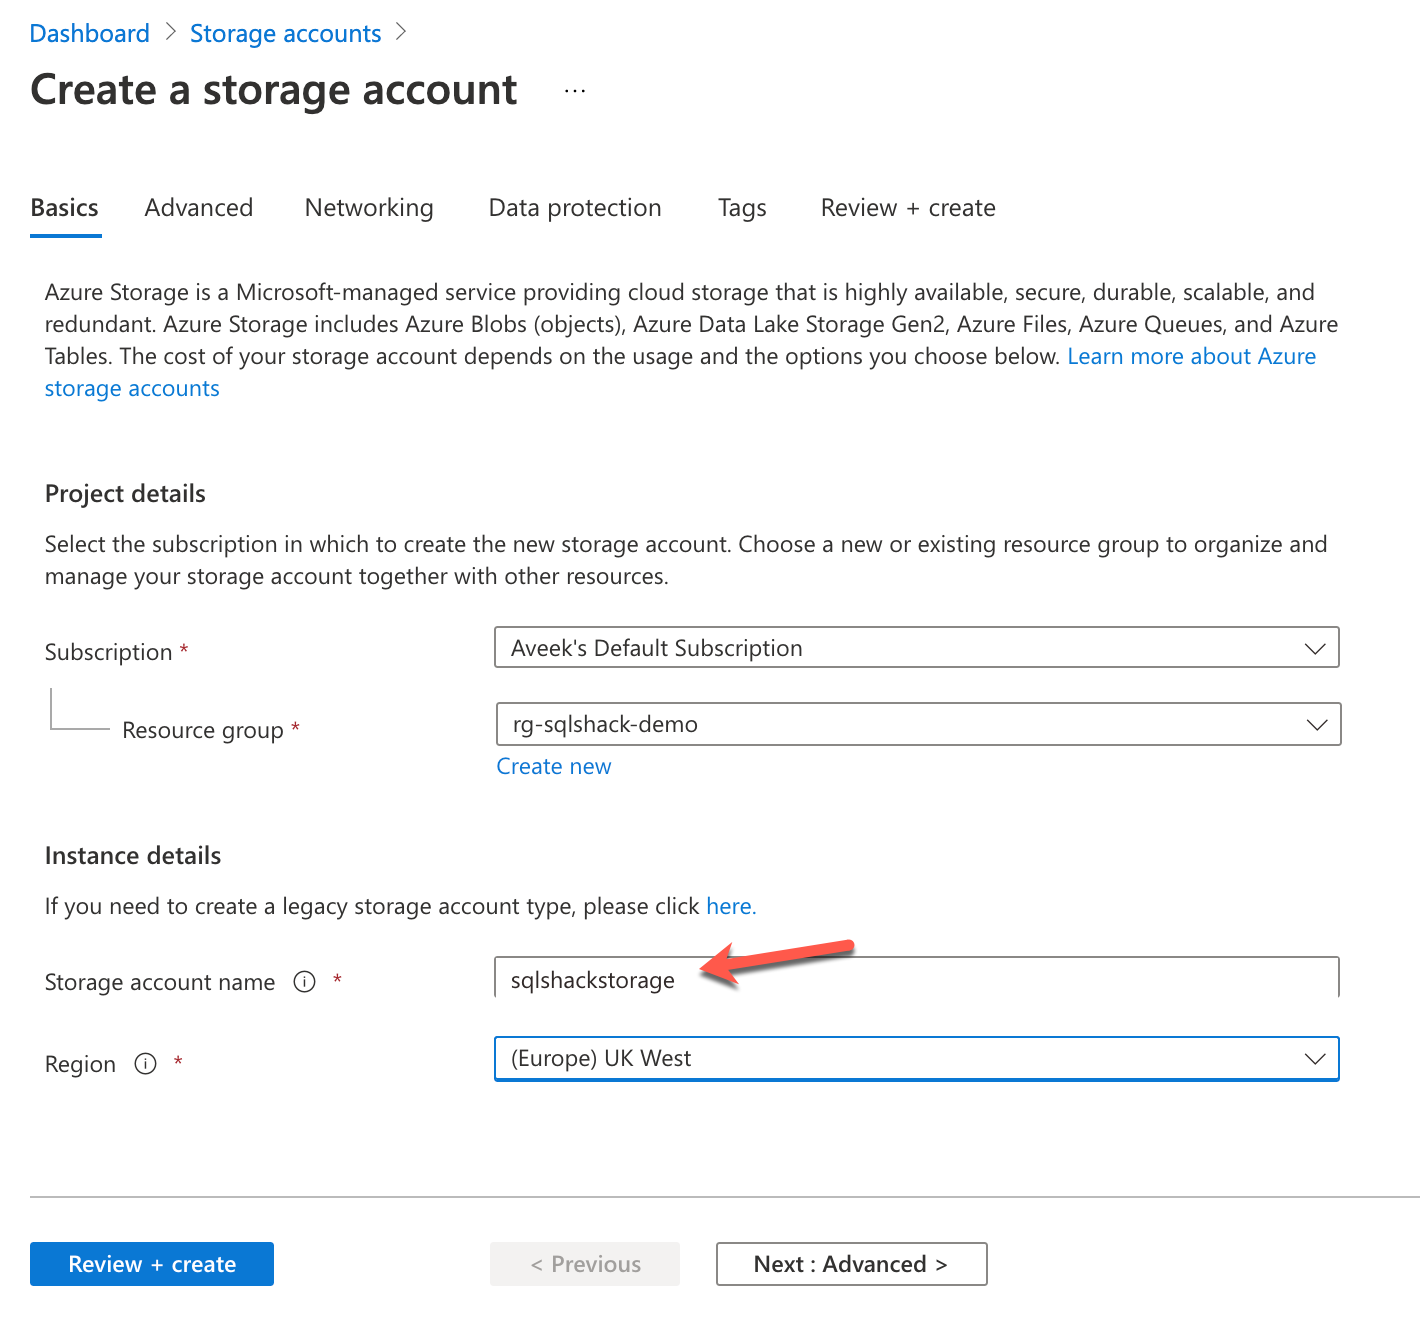 Creating the Storage Account